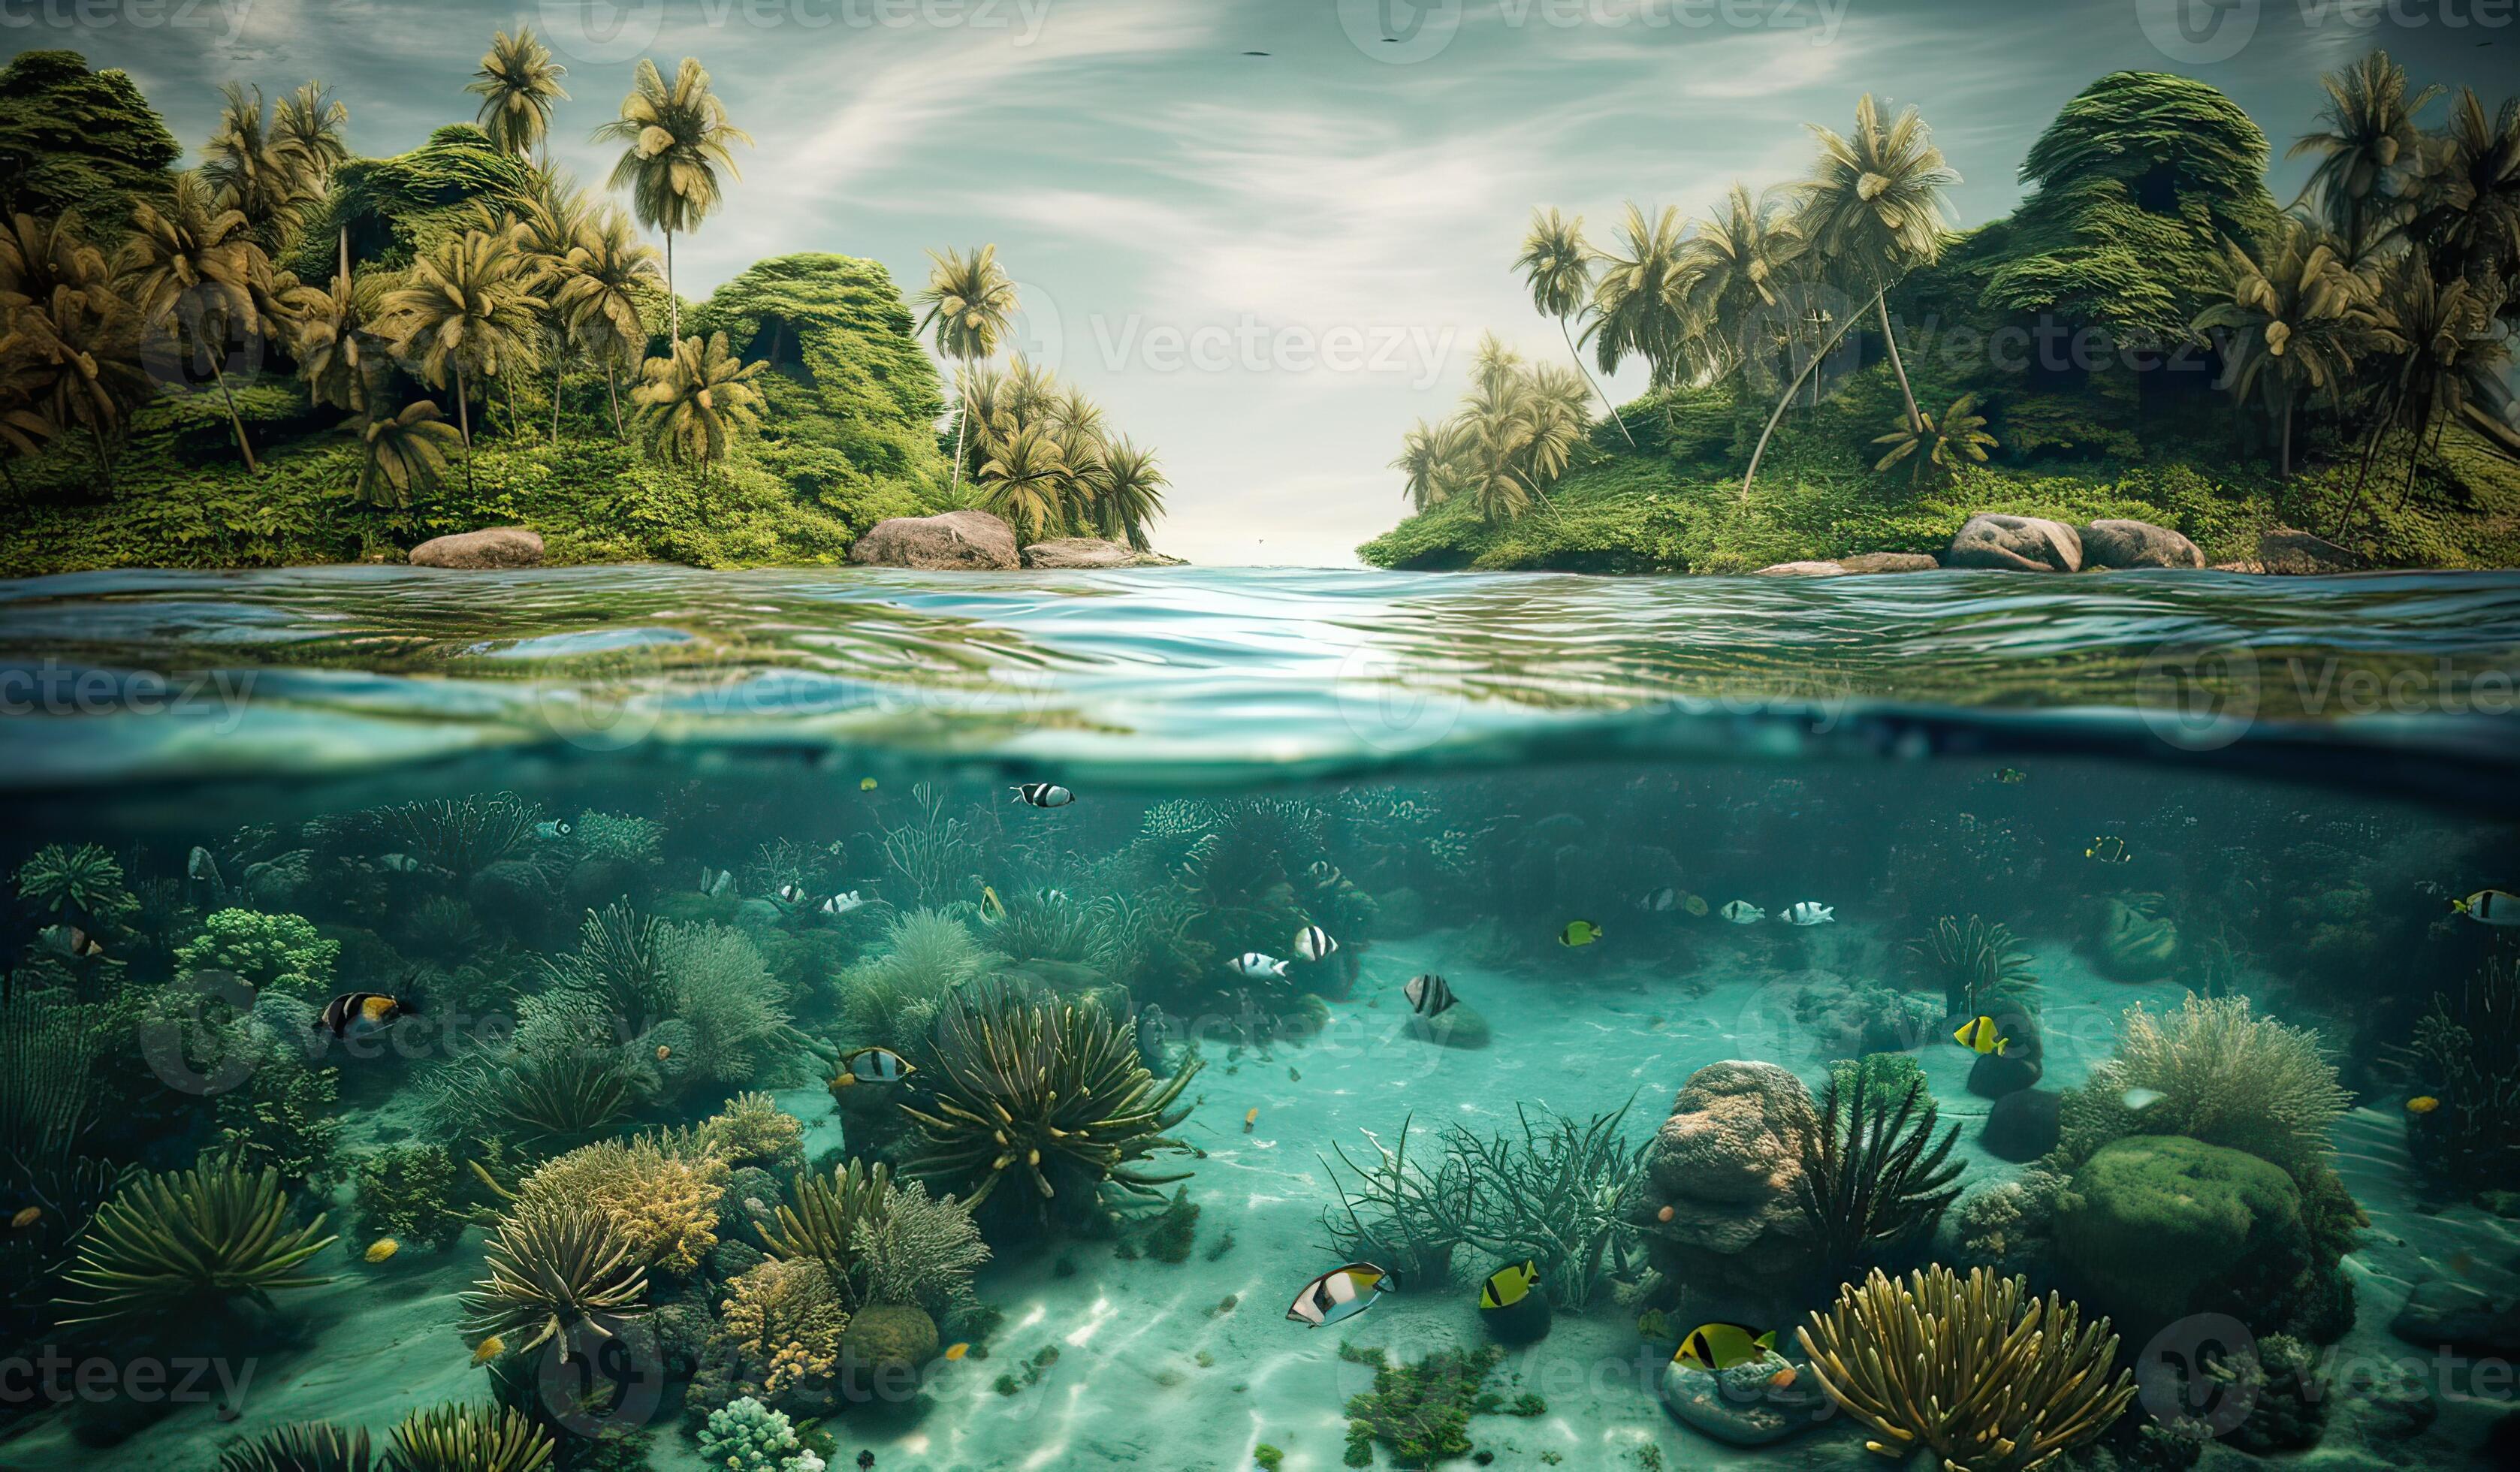 Smartphone HD Wallpaper | Underwater wallpaper, Sea life wallpaper, Ocean  wallpaper